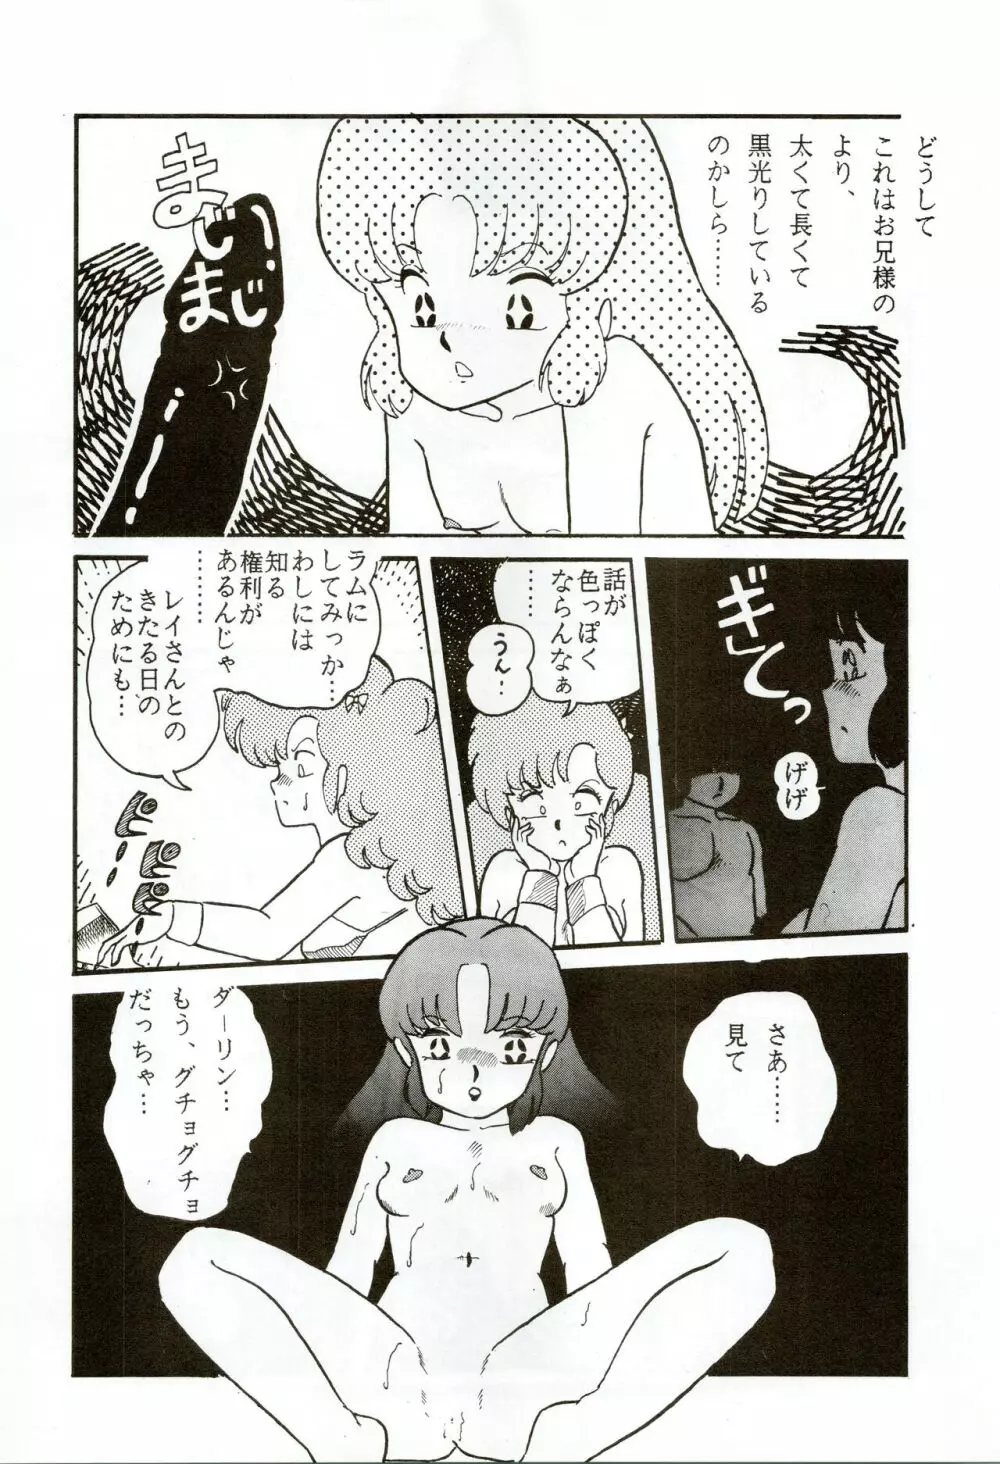 甲冑伝説 - page57